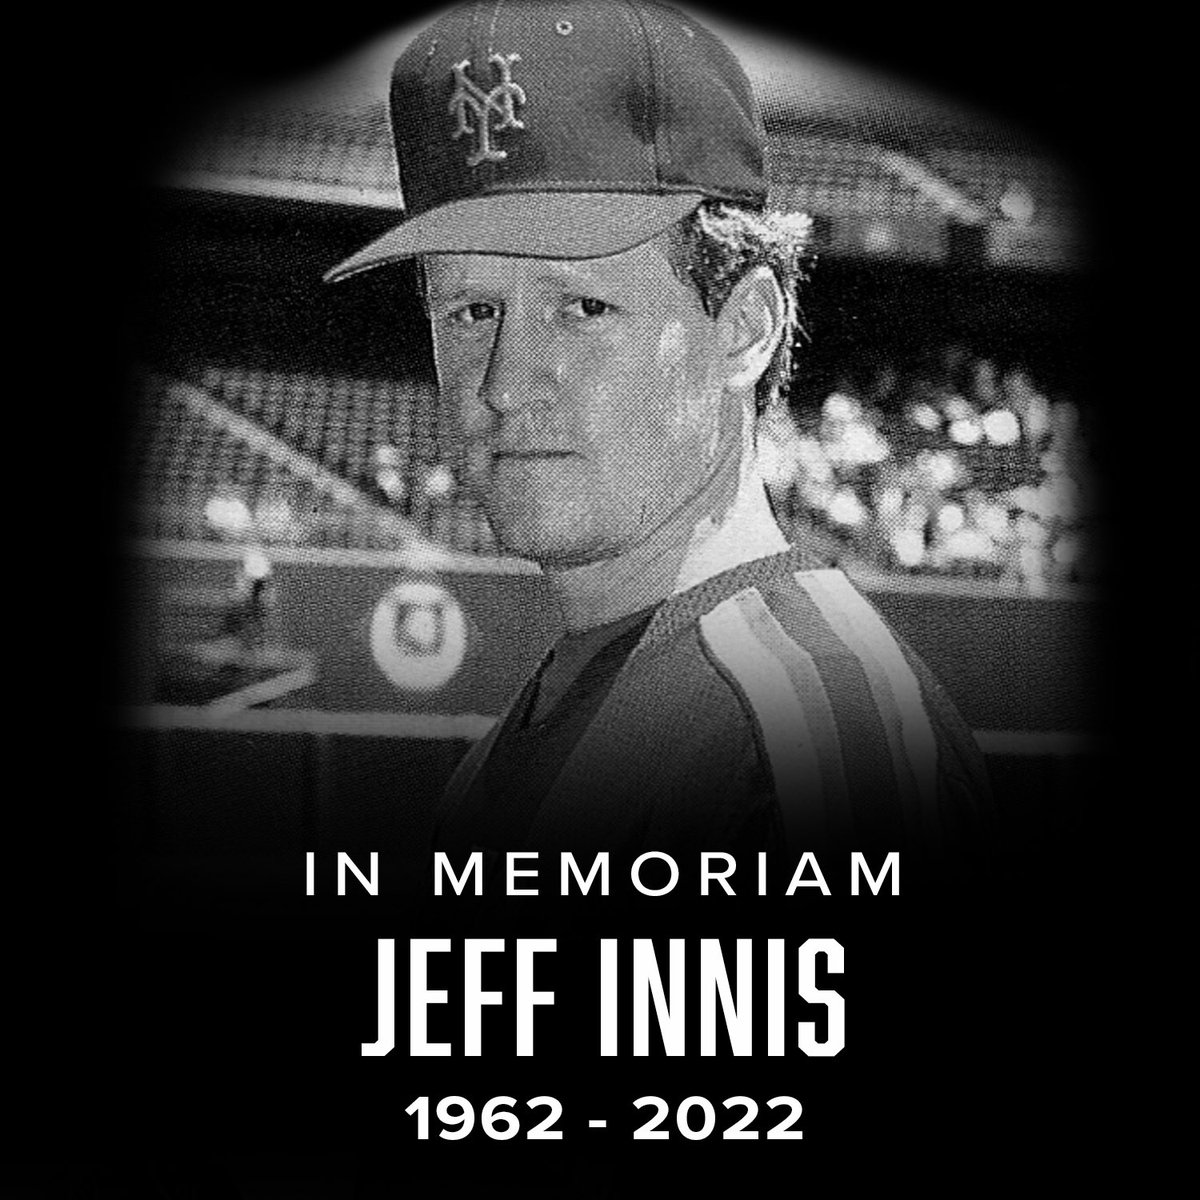 Rest In Peace Jeff Innis.